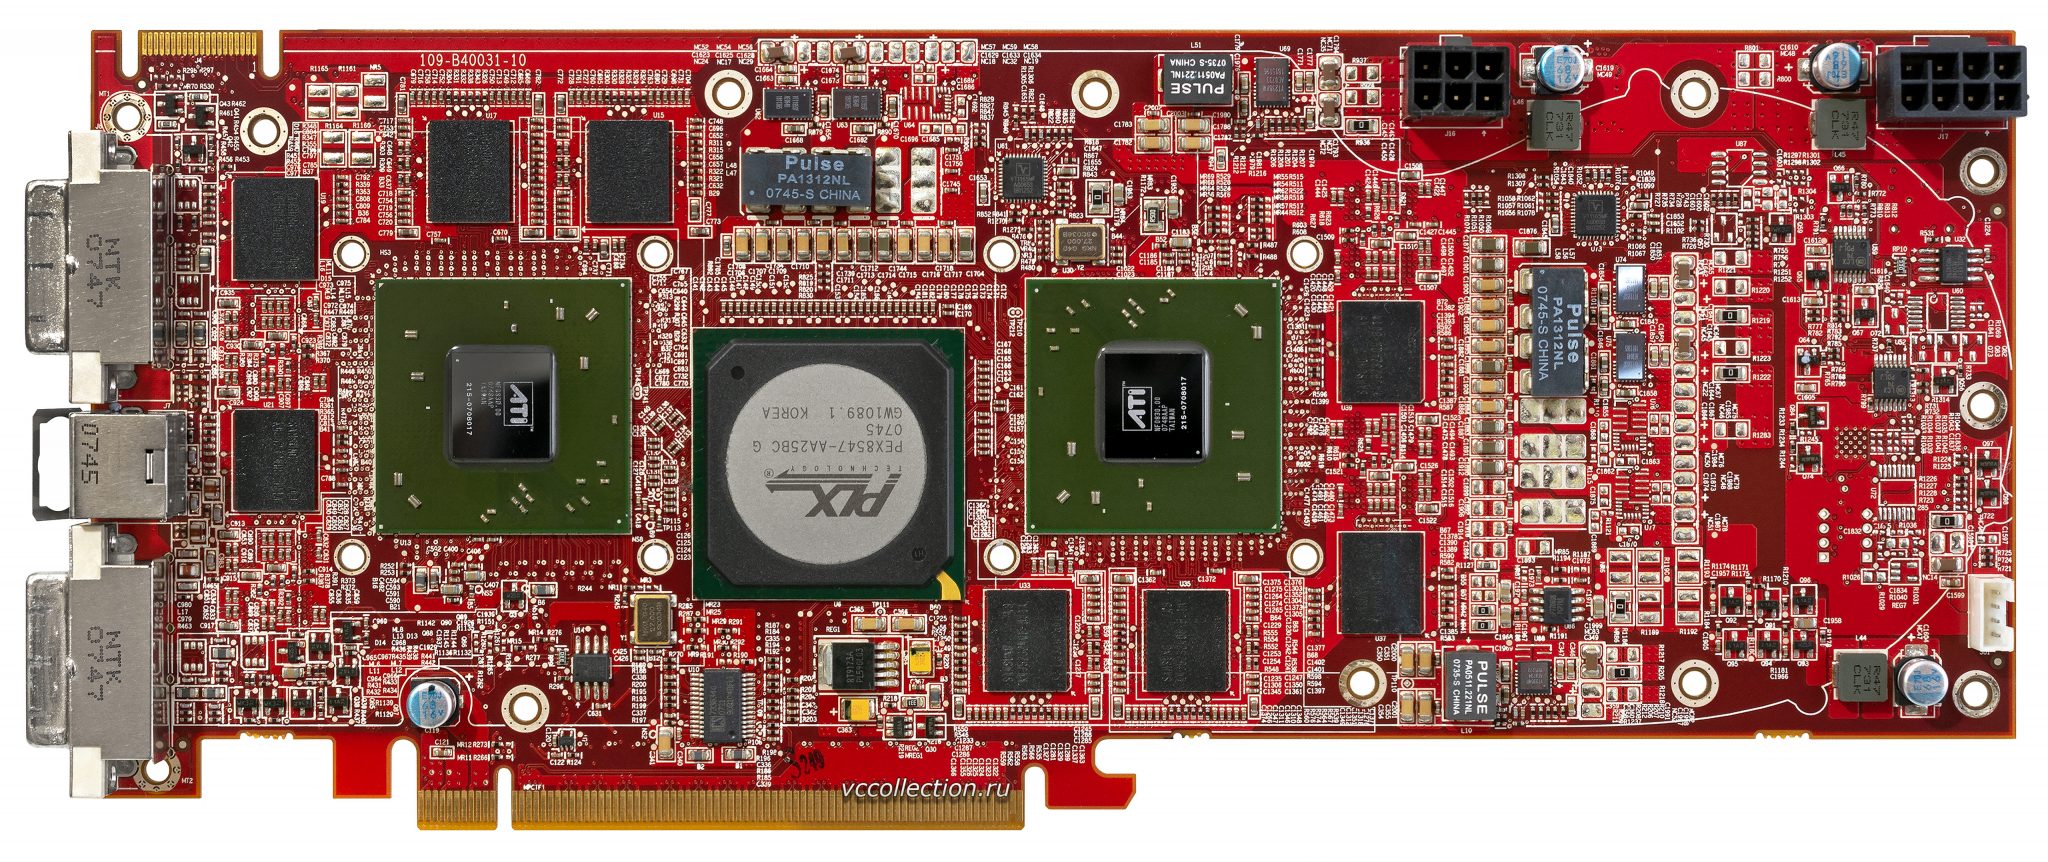 Radeon tm 780m. Видеокарта ATI Radeon 3870. Radeon FX 5200. GEFORCE FX 5500.